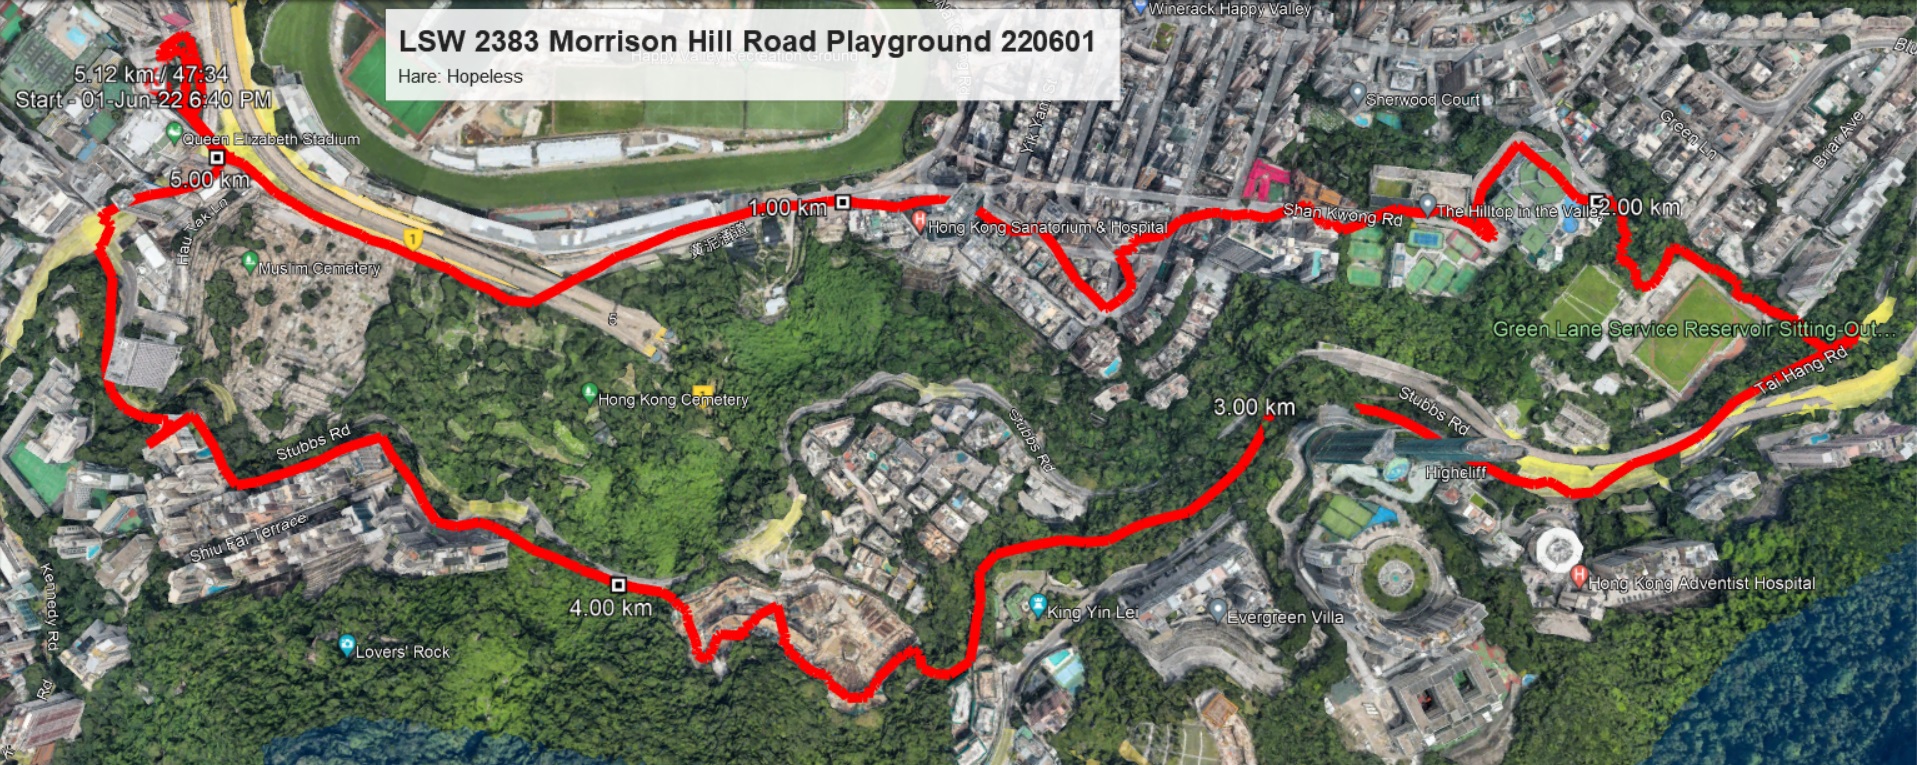 Morrison Hill Road Playground 220601 5.11km